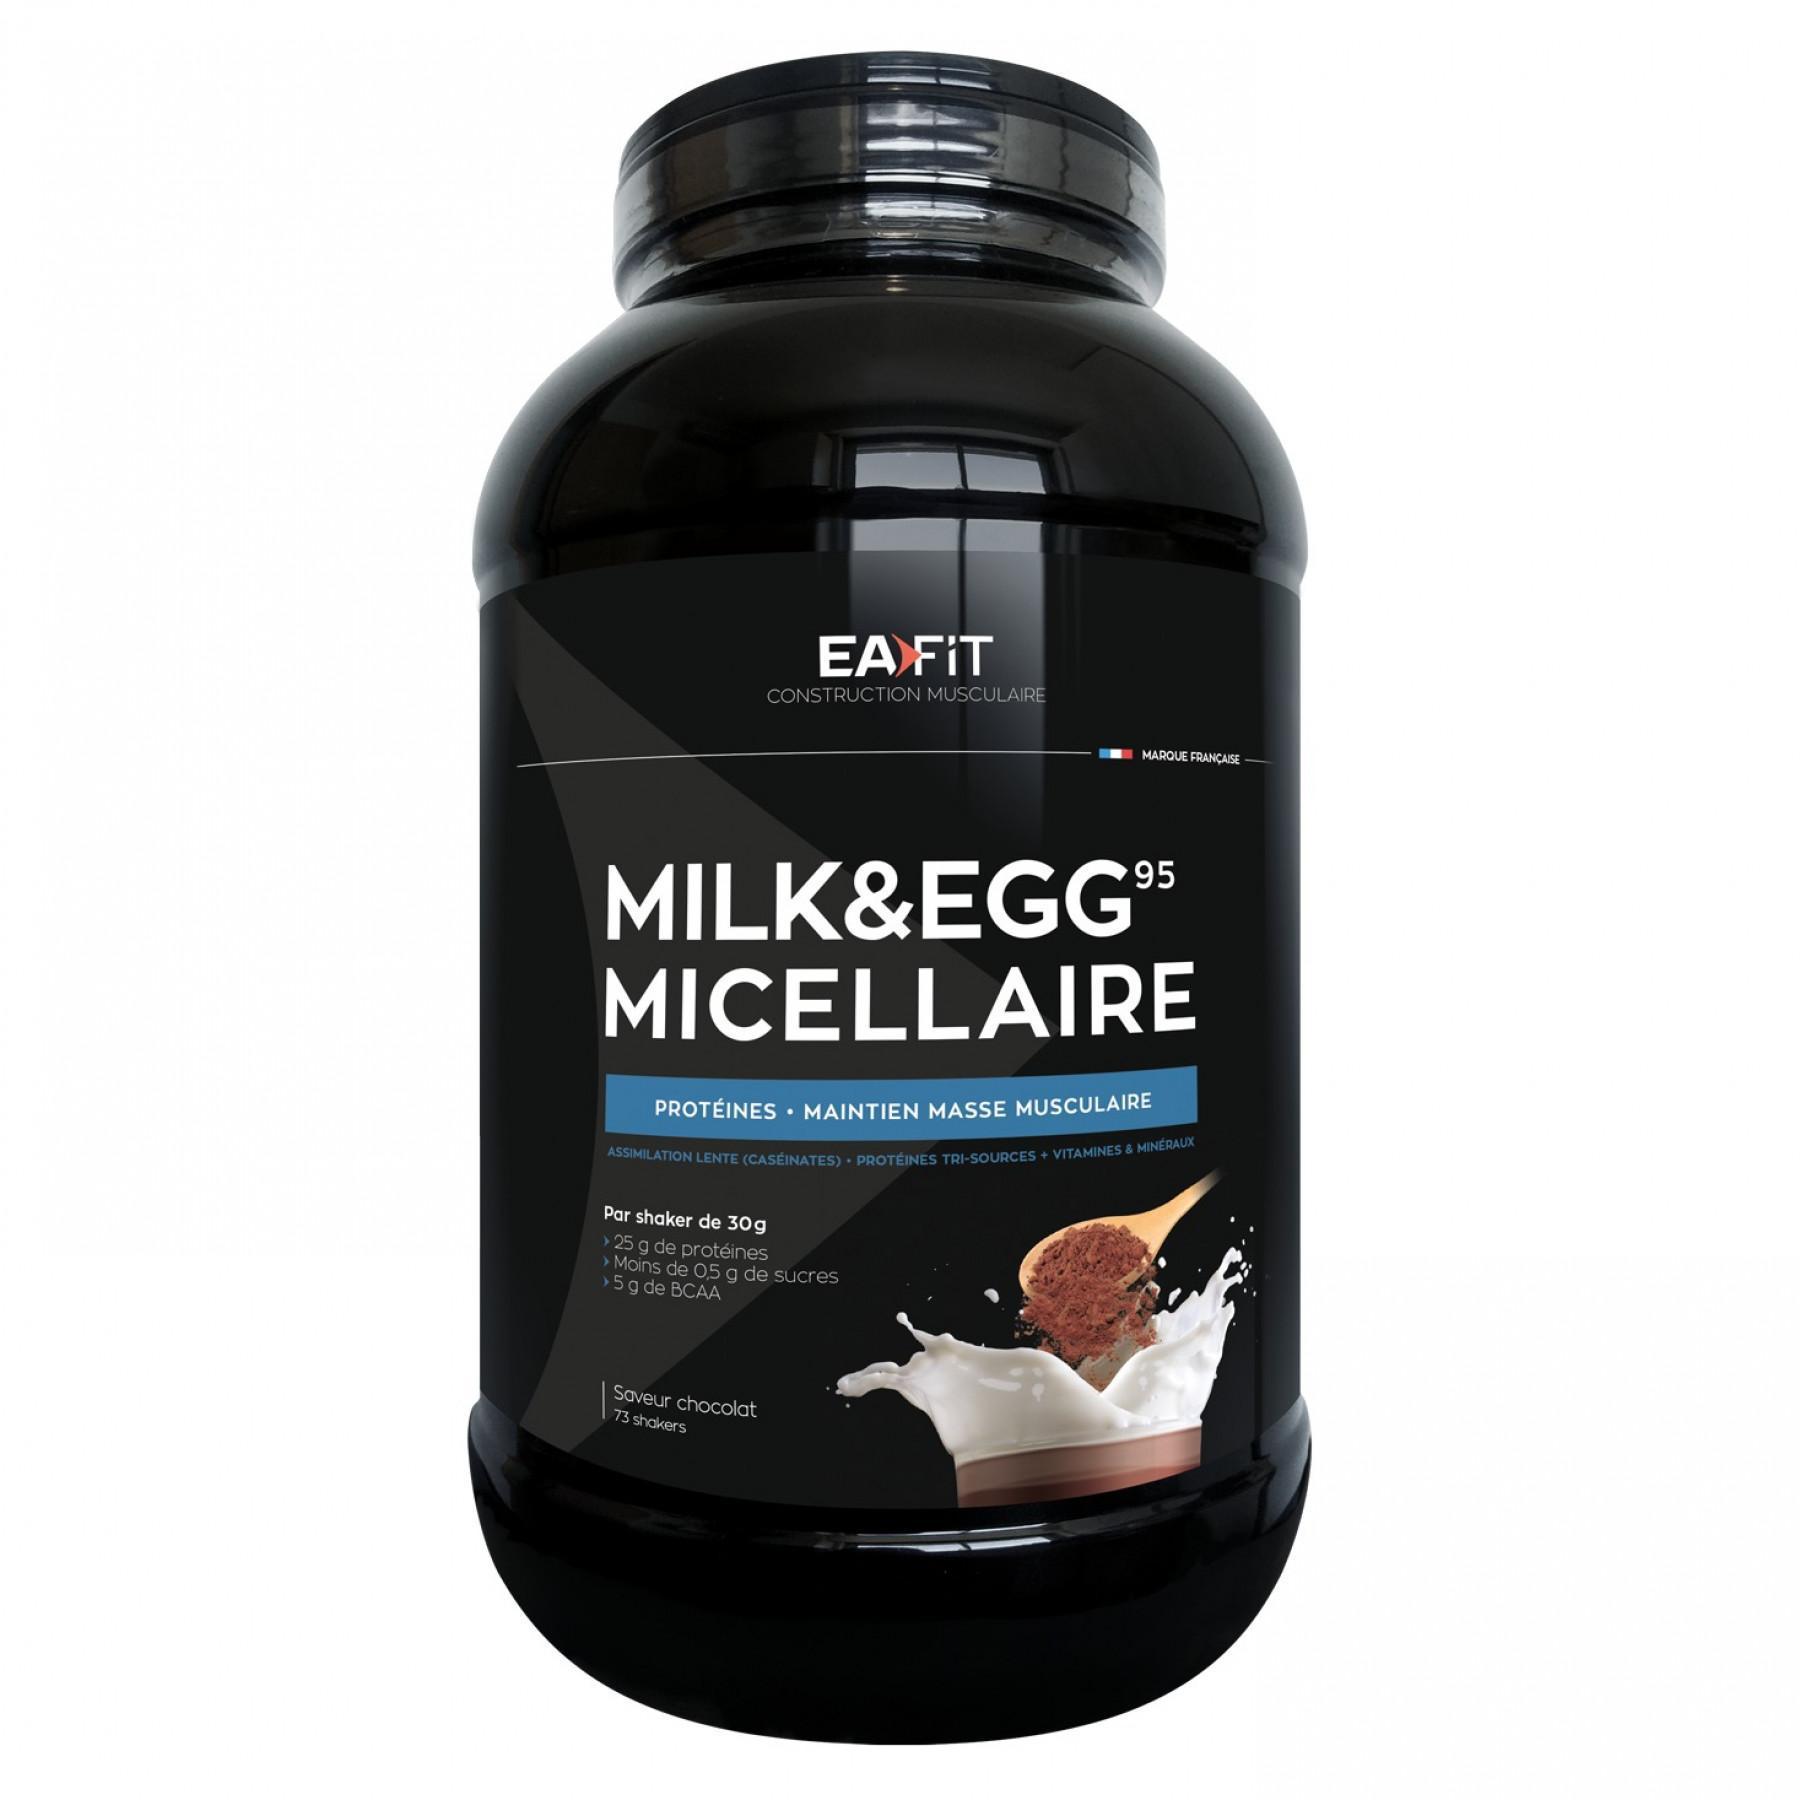 Czekolada micelarna Milk & egg 95 EA Fit 2,2kg